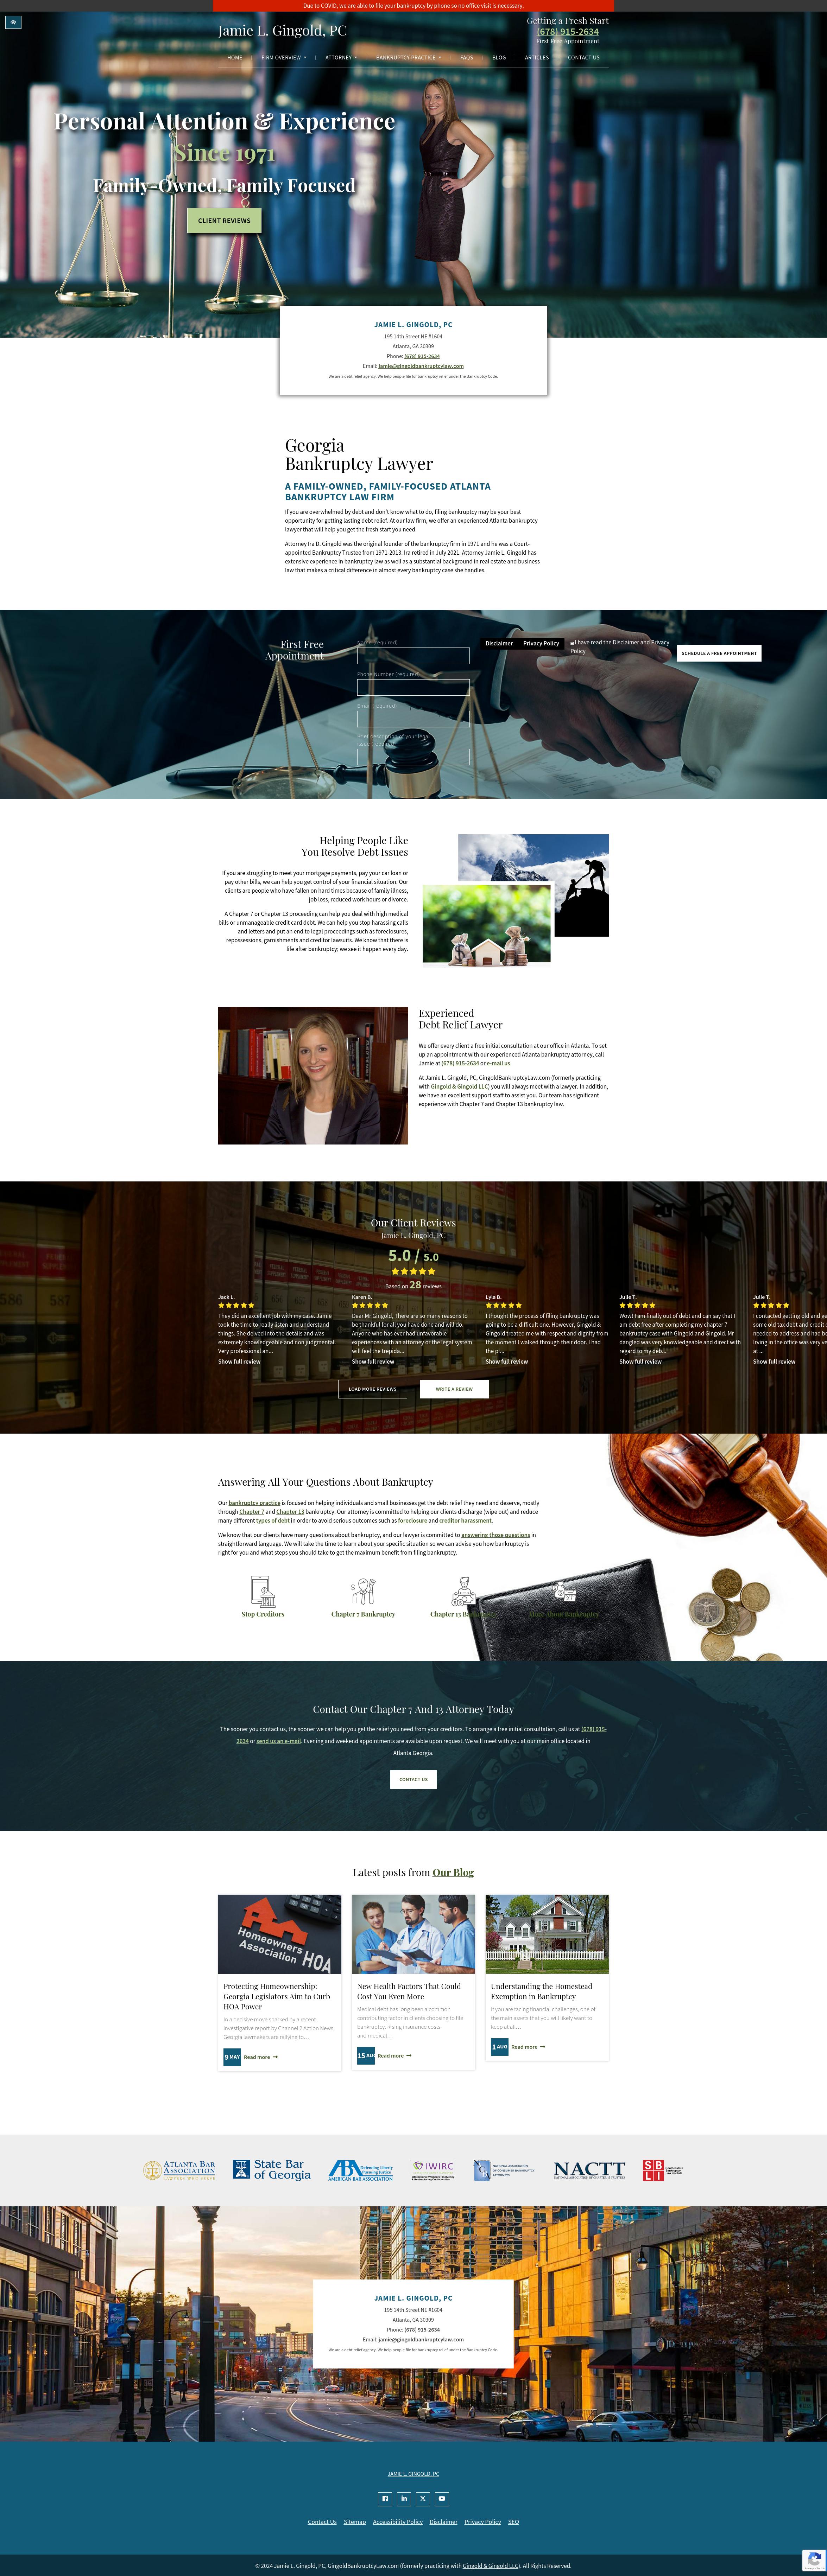 Gingold & Gingold LLC - Atlanta GA Lawyers